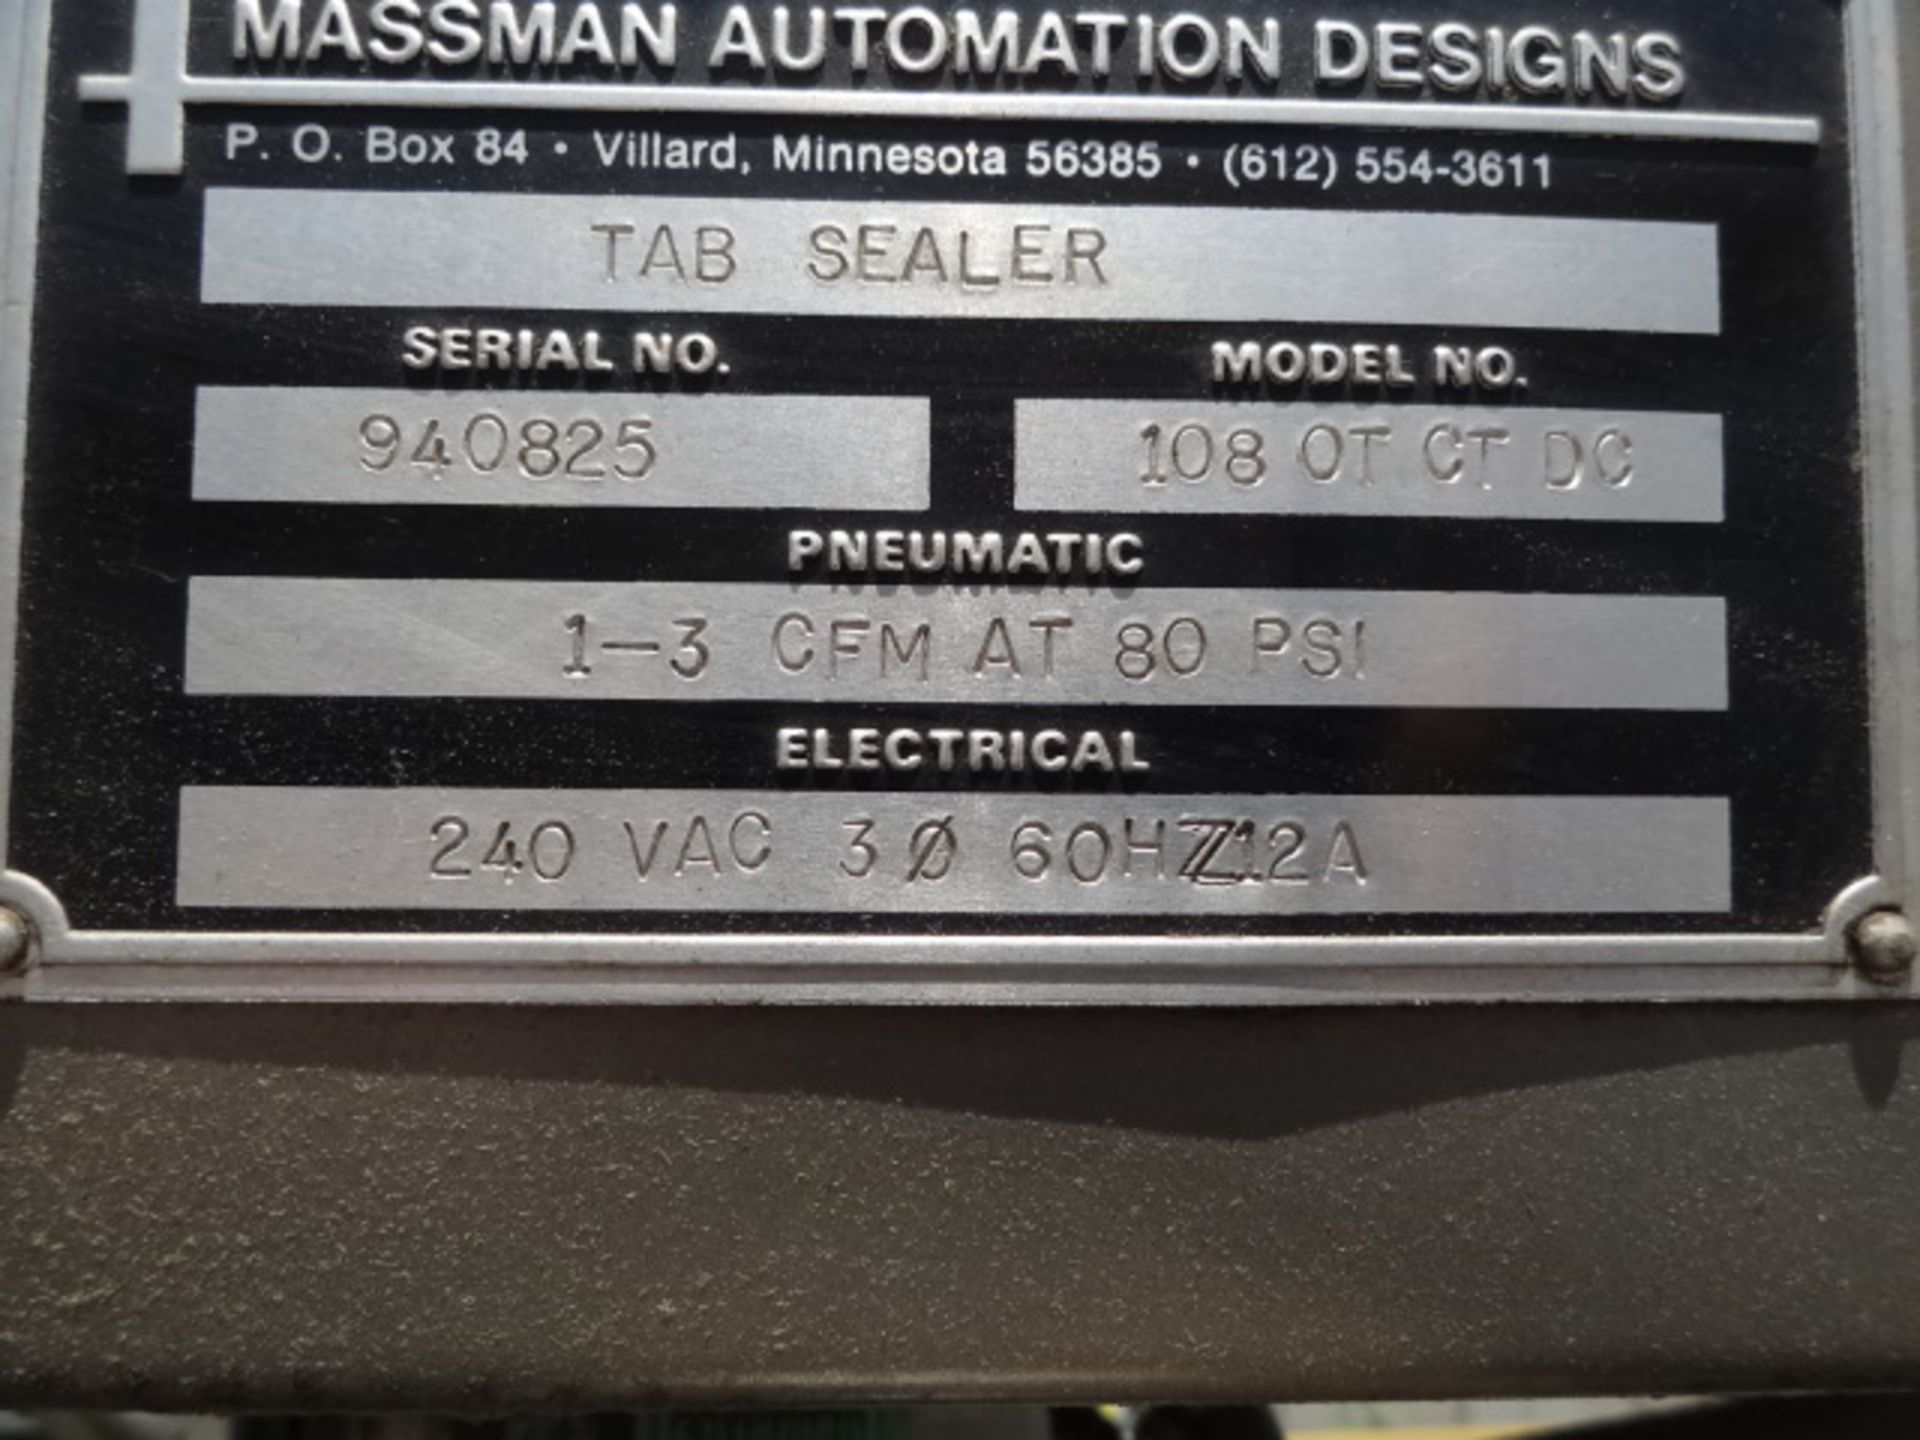 Massman Side-tab Sealer, Model # 108-OTCT, S/N 940825, side flange sealer for bliss-style box / - Image 6 of 7